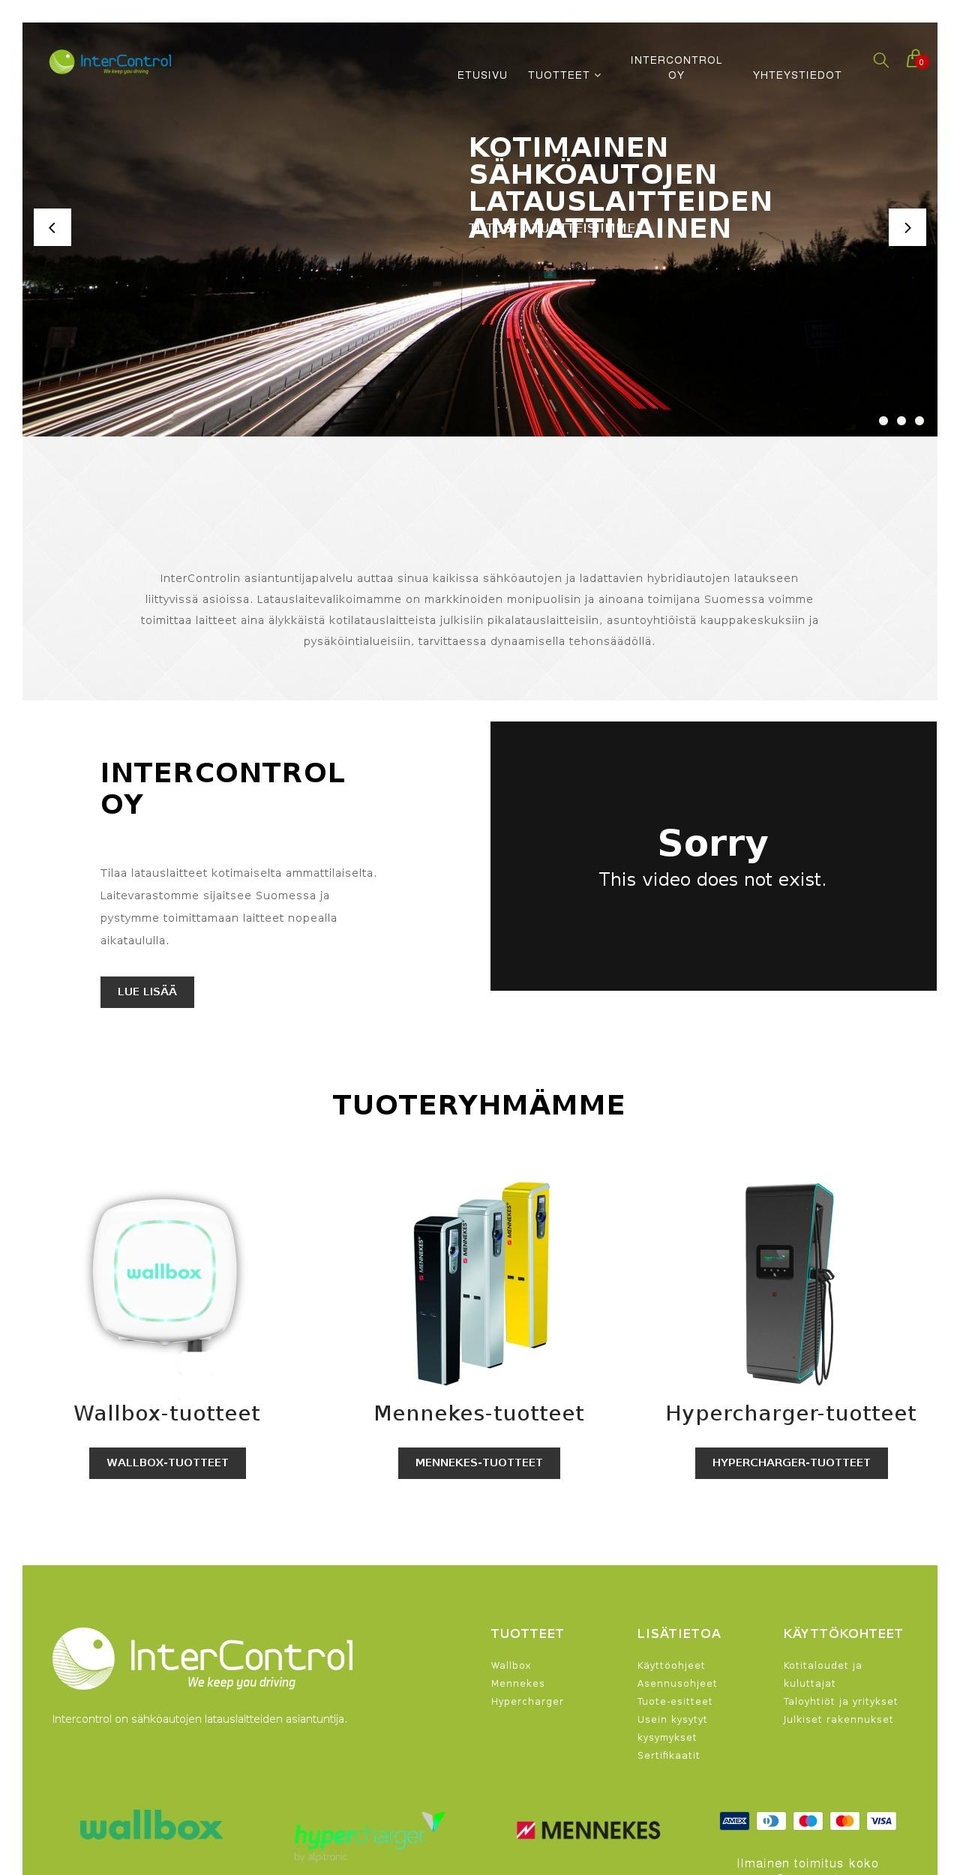 intercontrol.fi shopify website screenshot